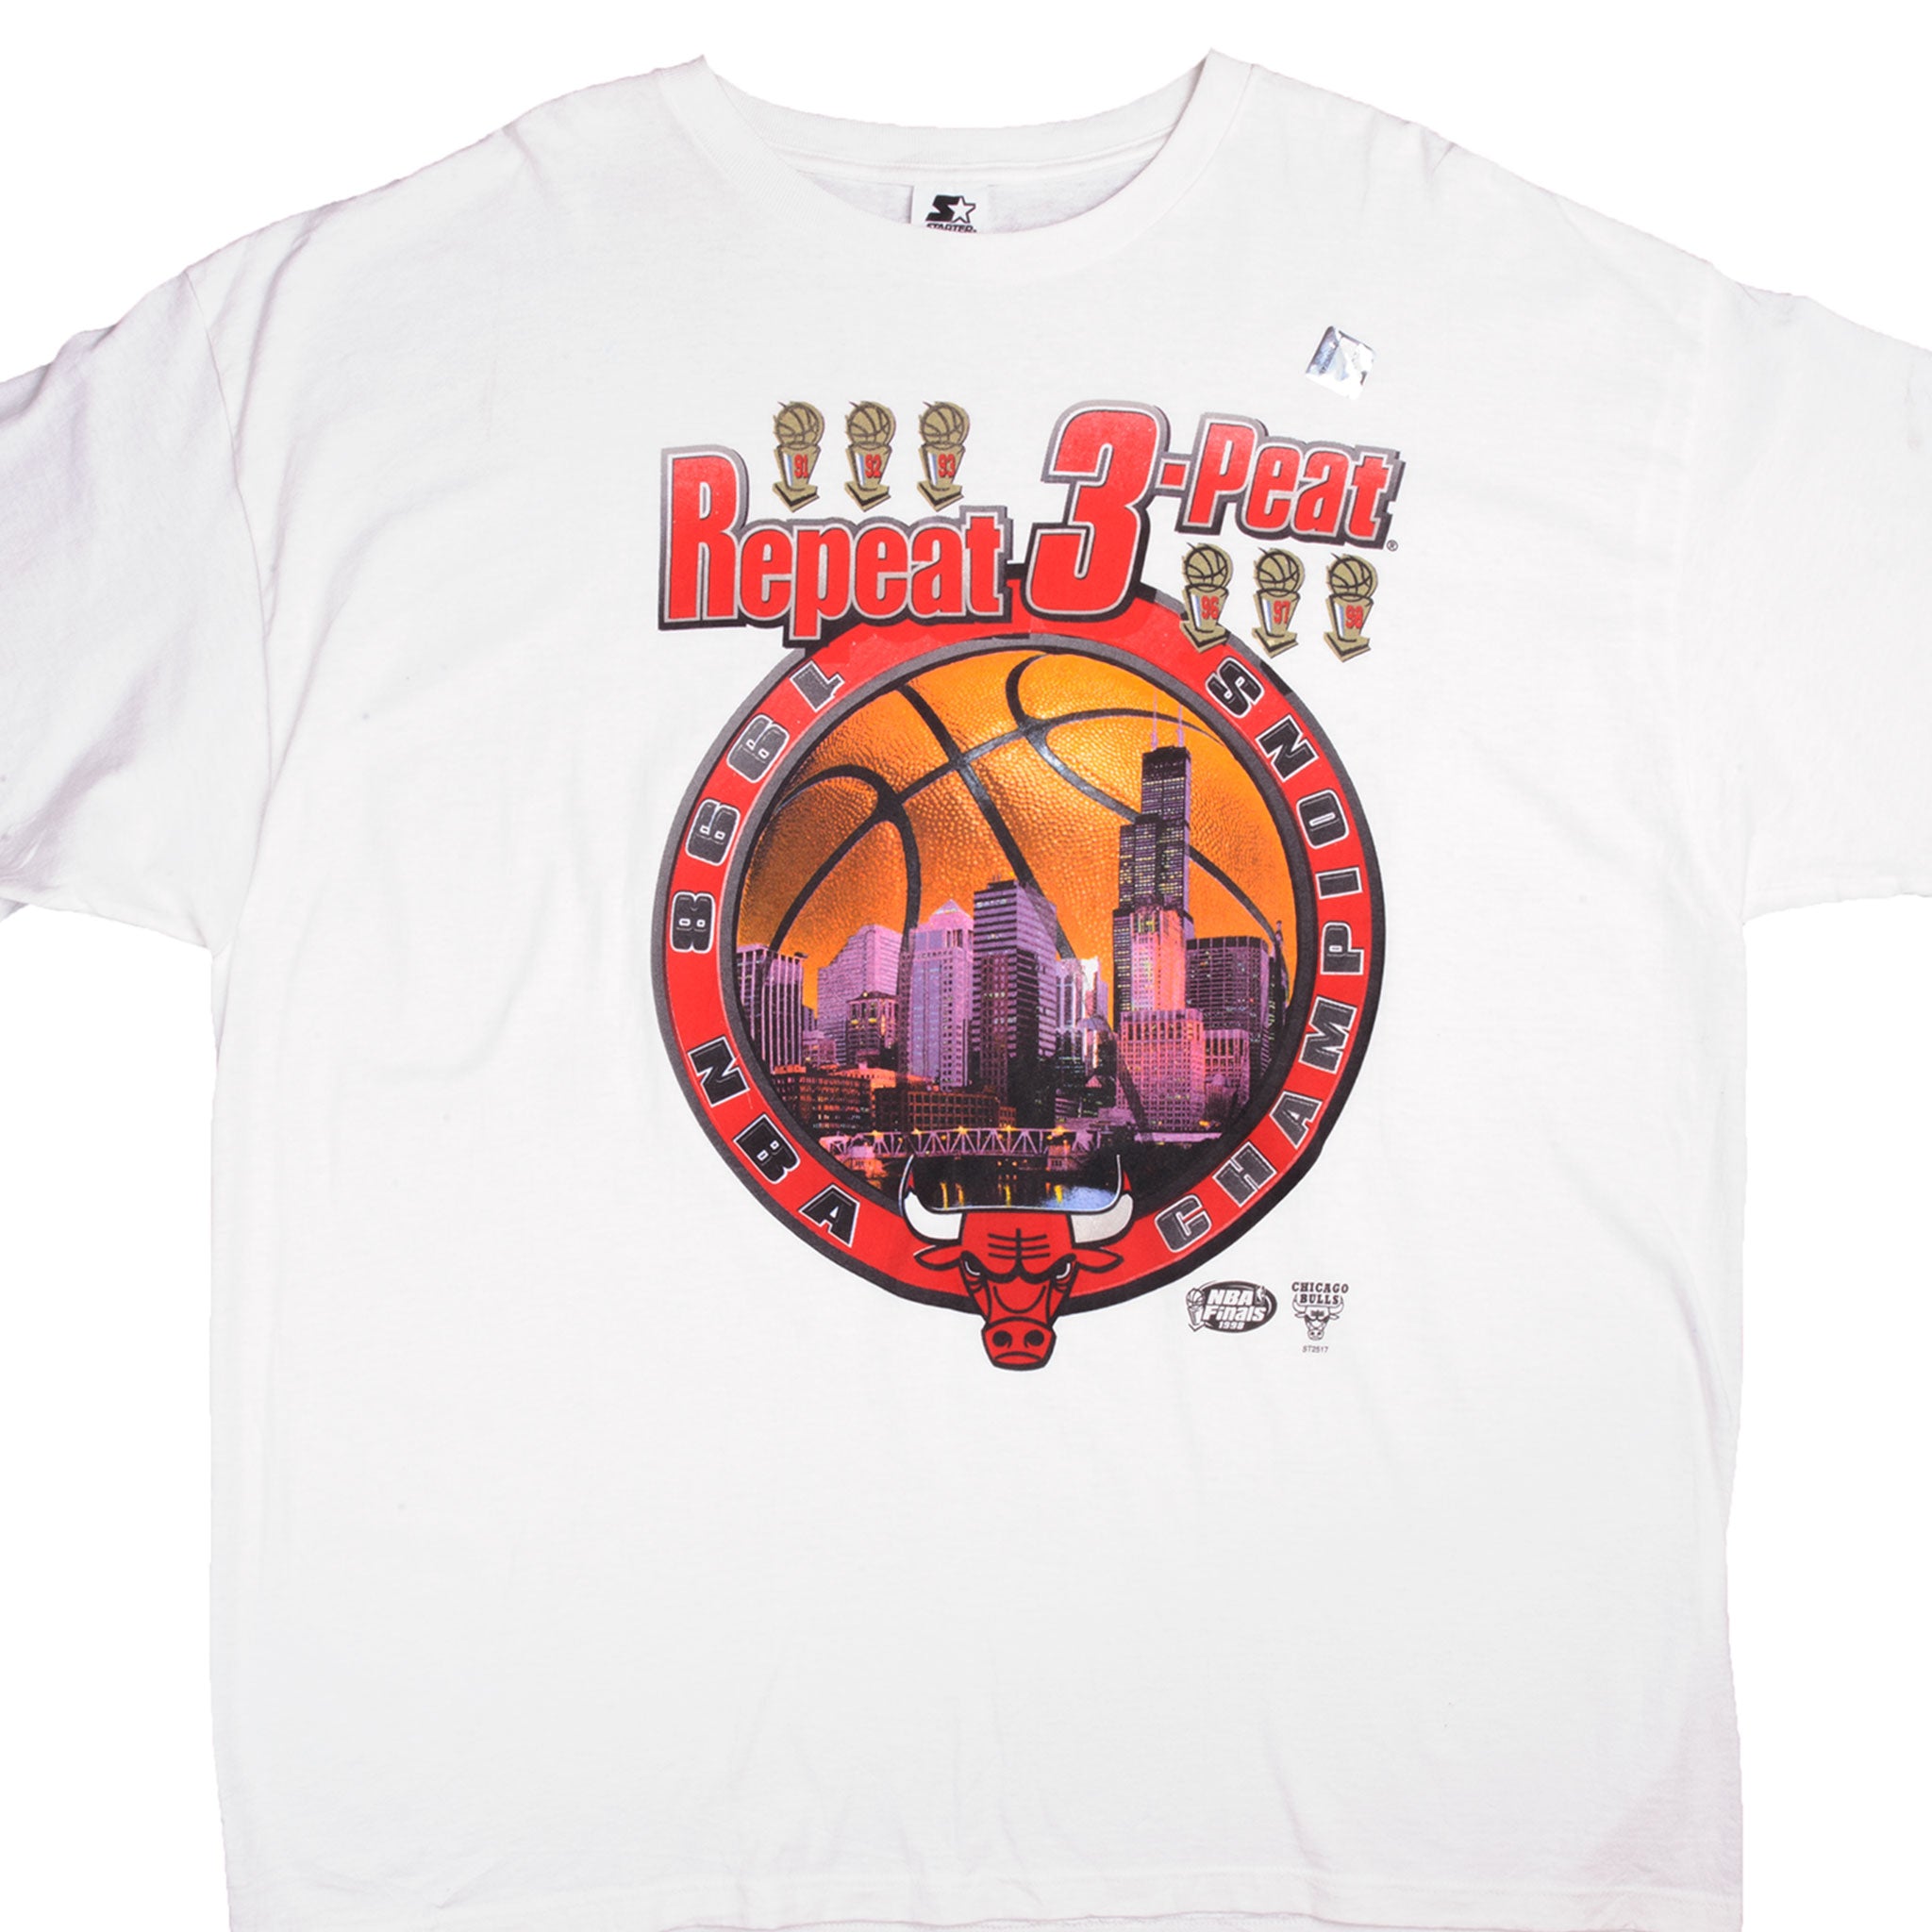 Vintage Chicago Bulls Shirt L